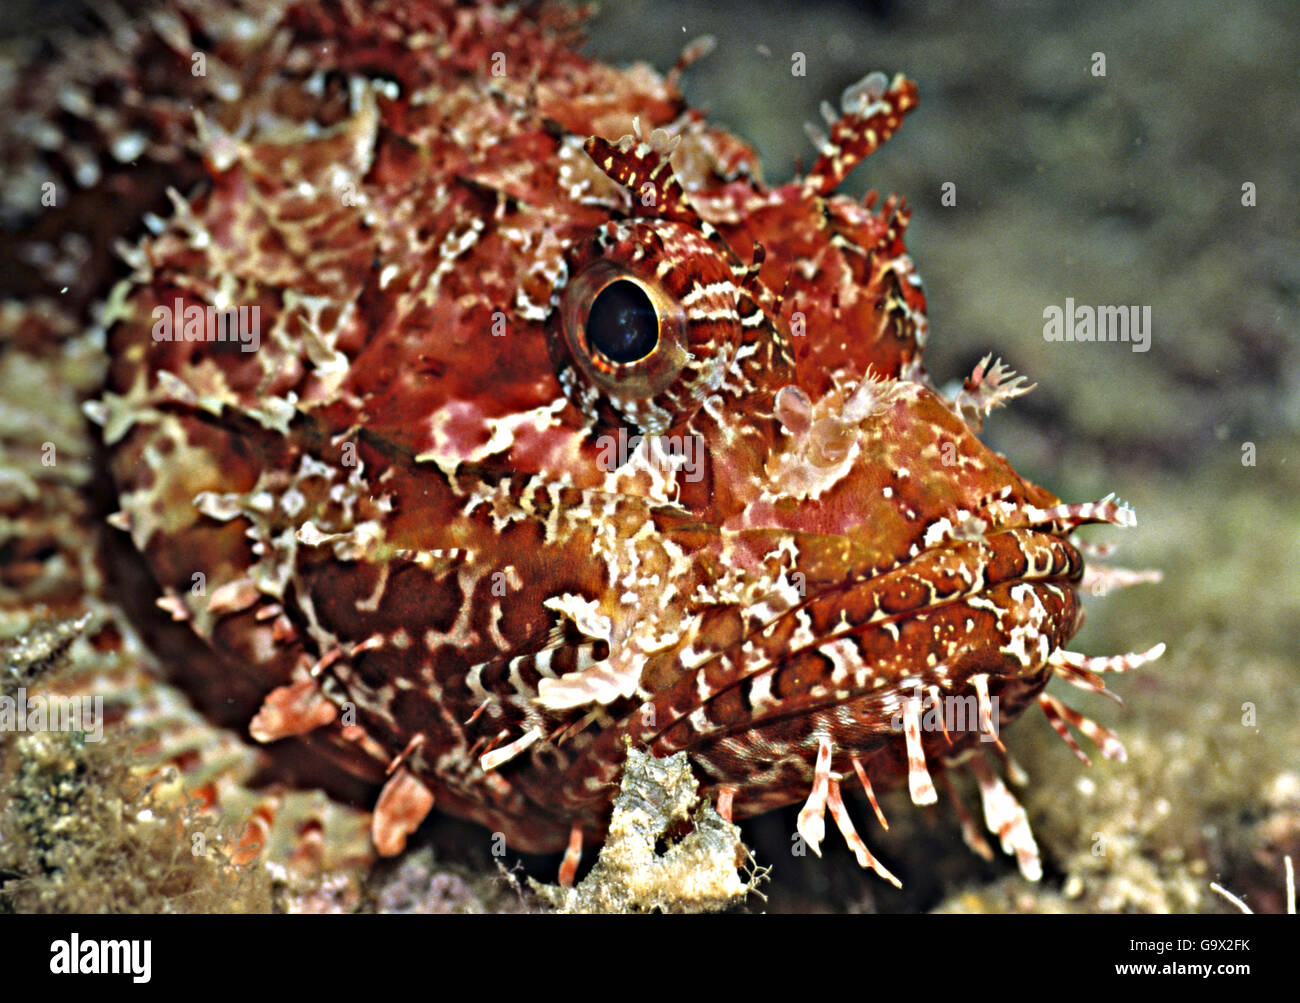 head of largescaled red scorpionfish, Gozo, Malta, Europe, Mediterranean Sea / (Scorpaena scrofa) Stock Photo